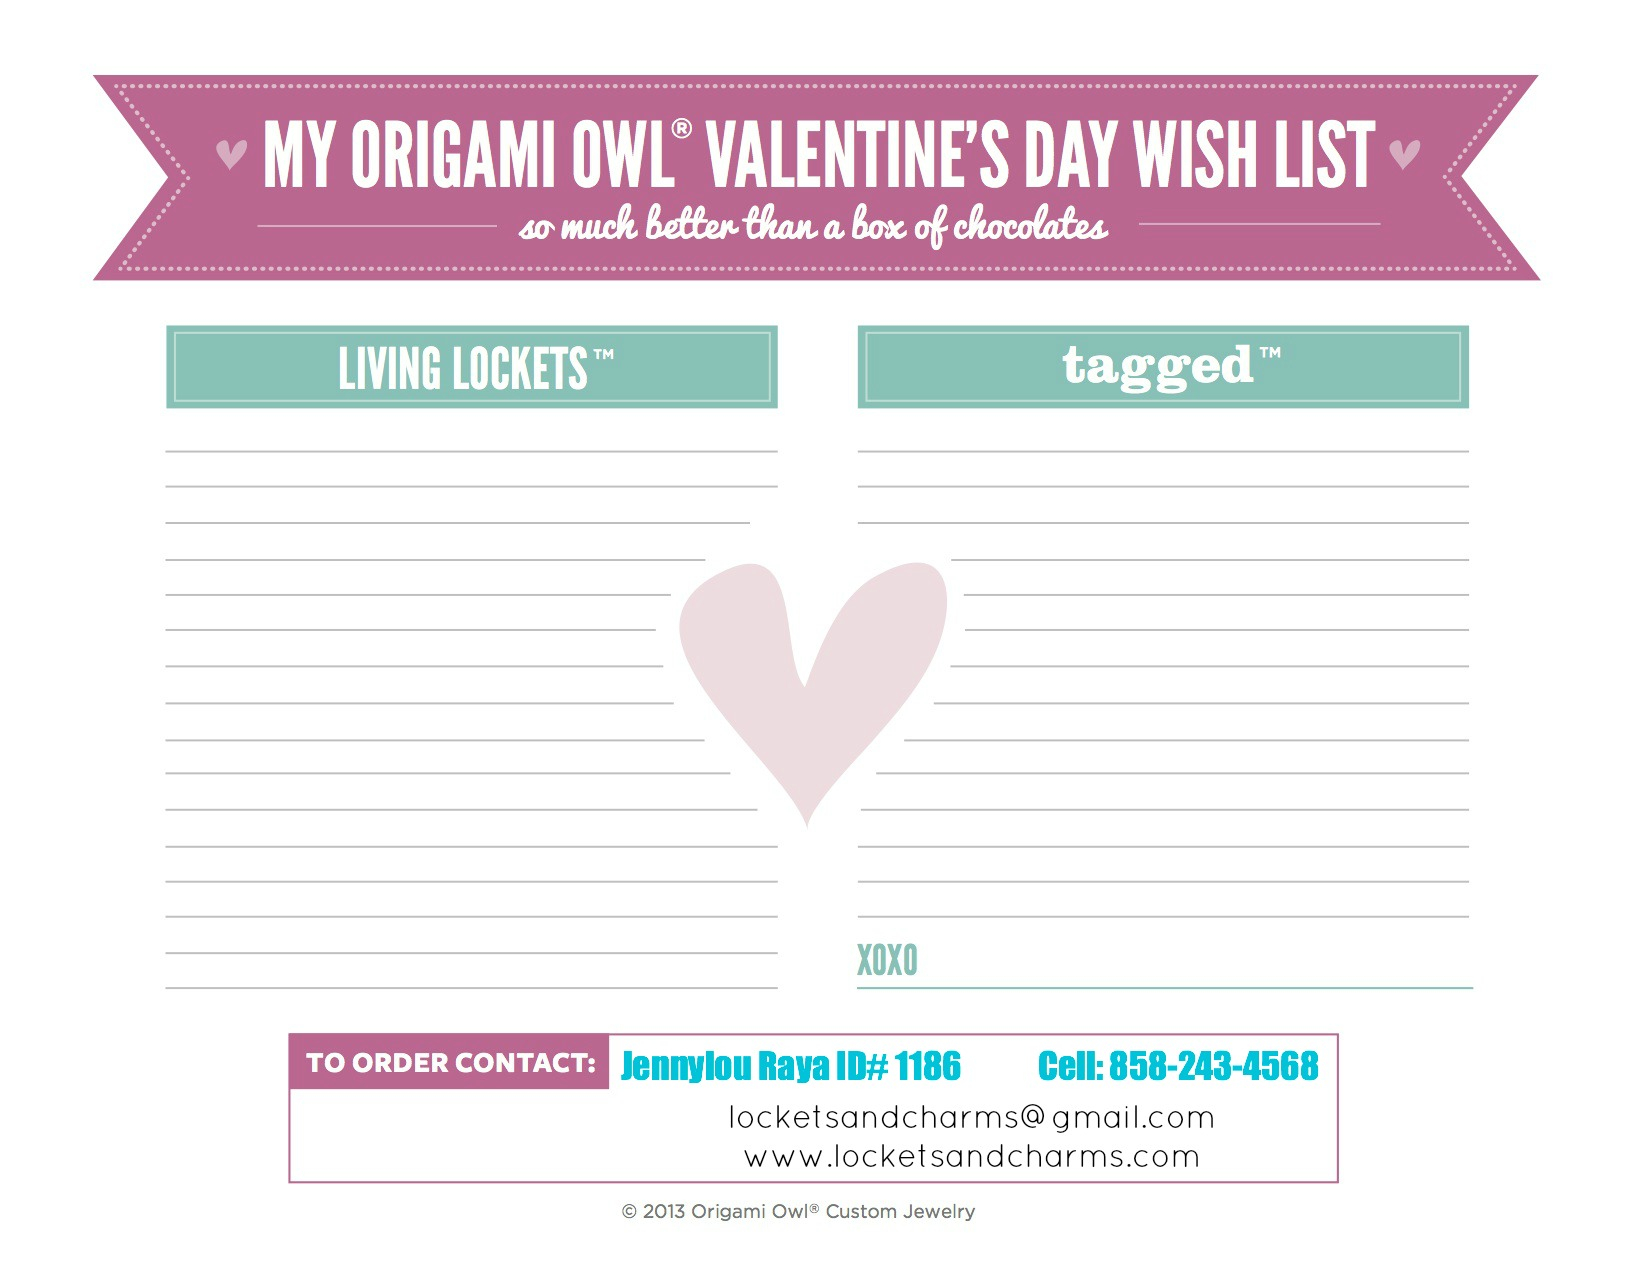 How To Make Origami Owl Origami Owl Living Lockets Valentine Customized Jewelry